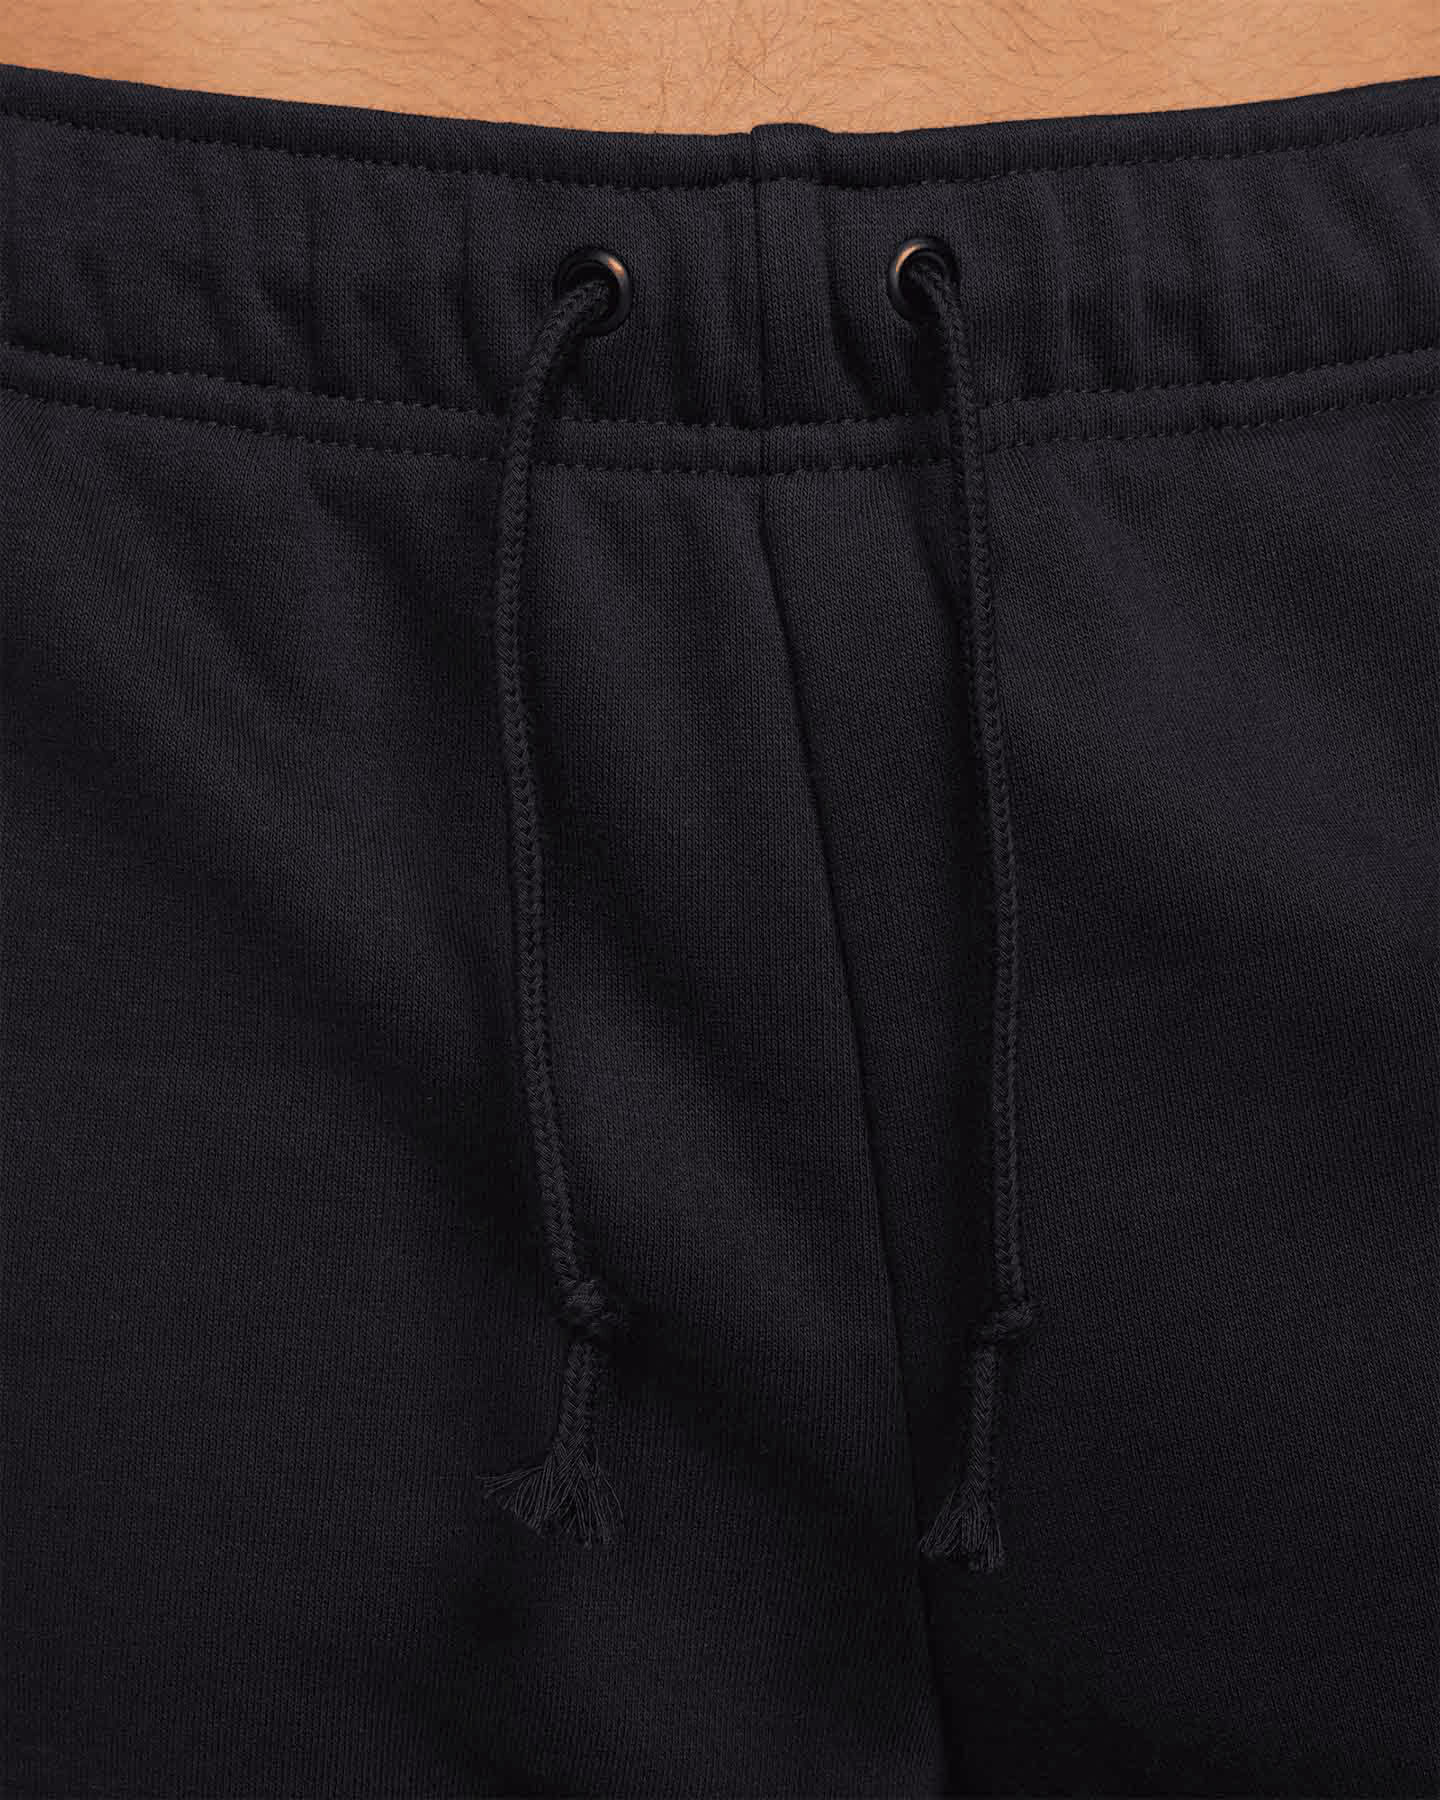  Pantalone NIKE OVER BIG LOGO W S5644459|010|S scatto 2